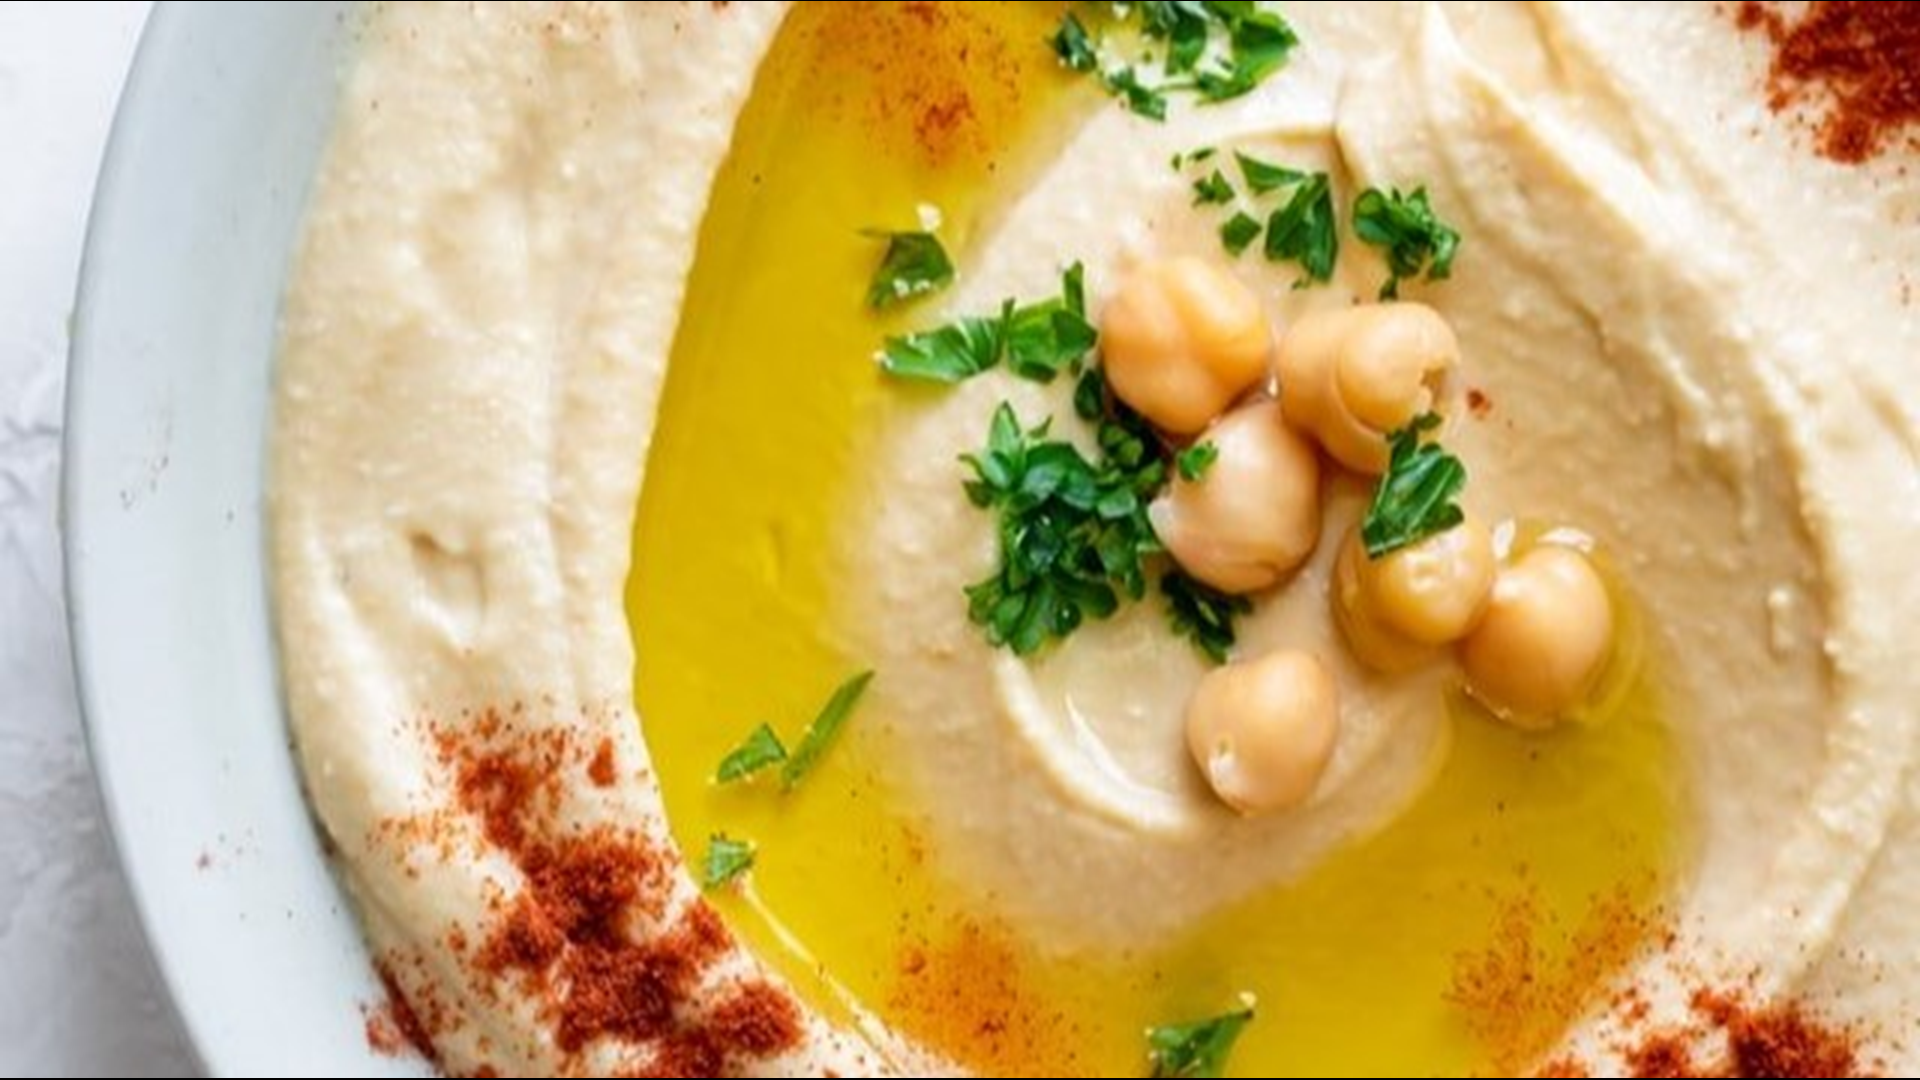 The Feel Good Foodie Yumna Jawad shows us how to make Lebanese-style hummus!